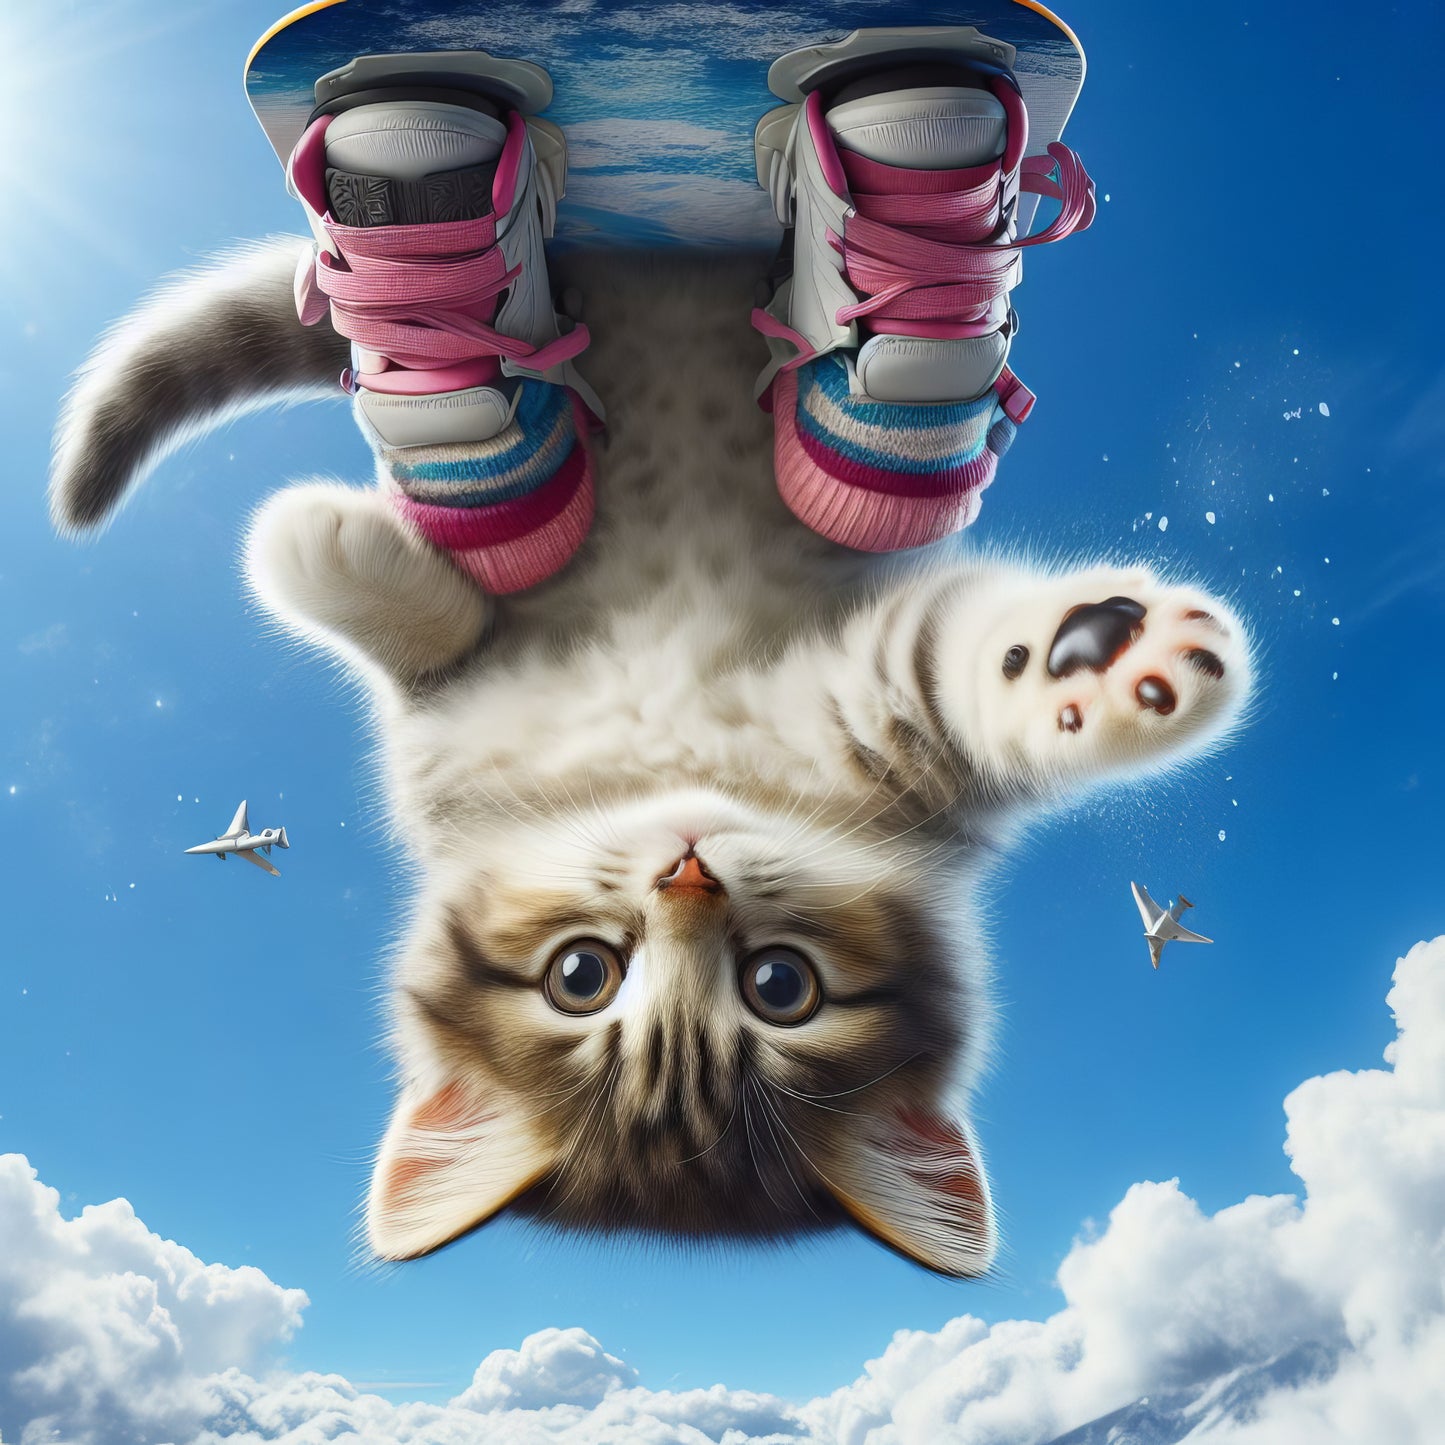 Kitten's Soaring Snowboard Stunt - Art Print